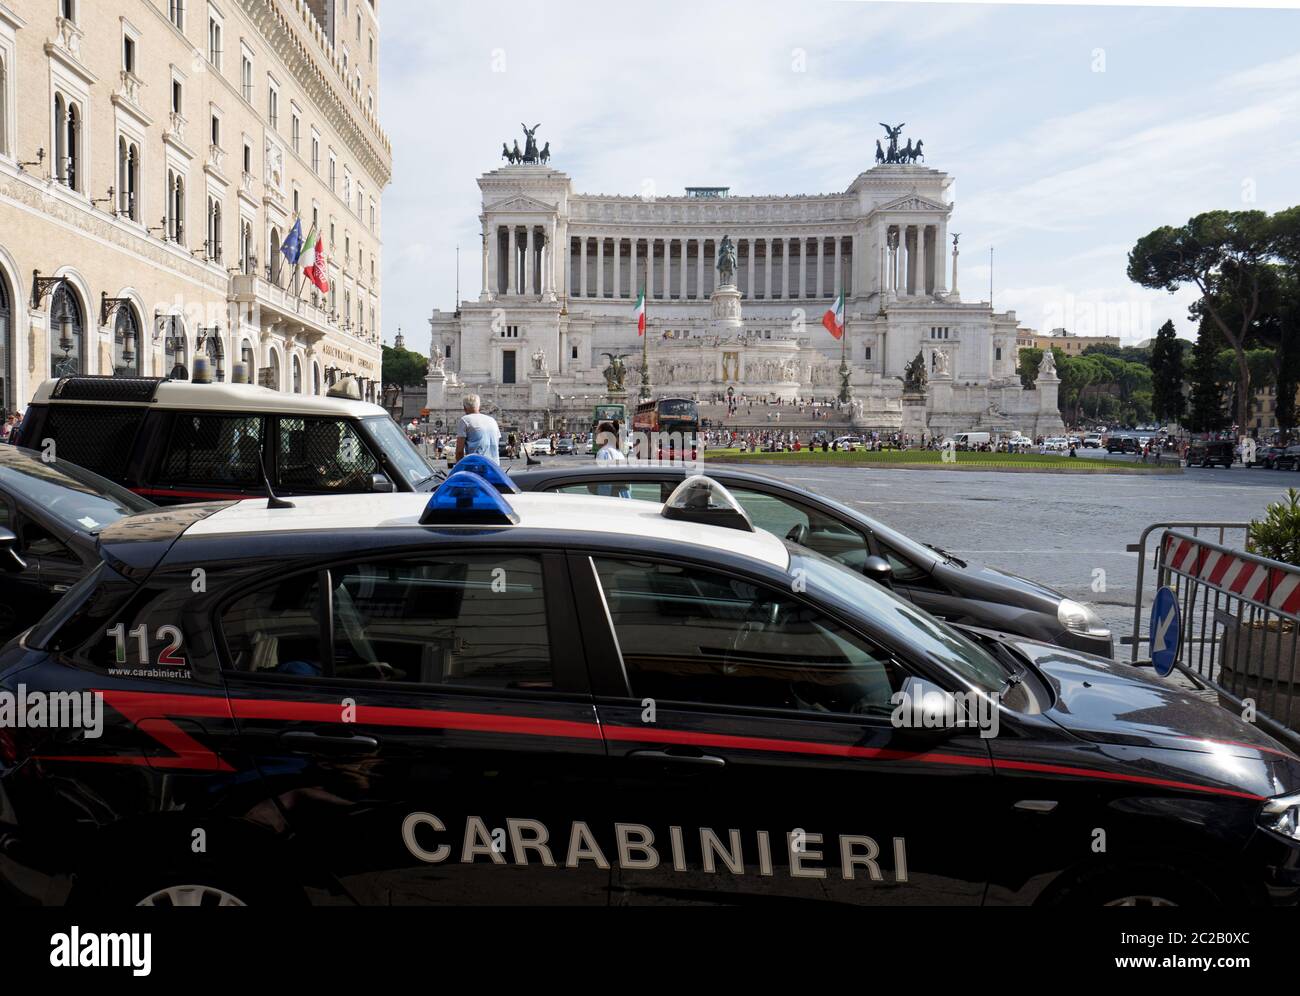 Fatherland memorial monument and Carabinieri police car, in Venice square, in Rome. Stock Photo